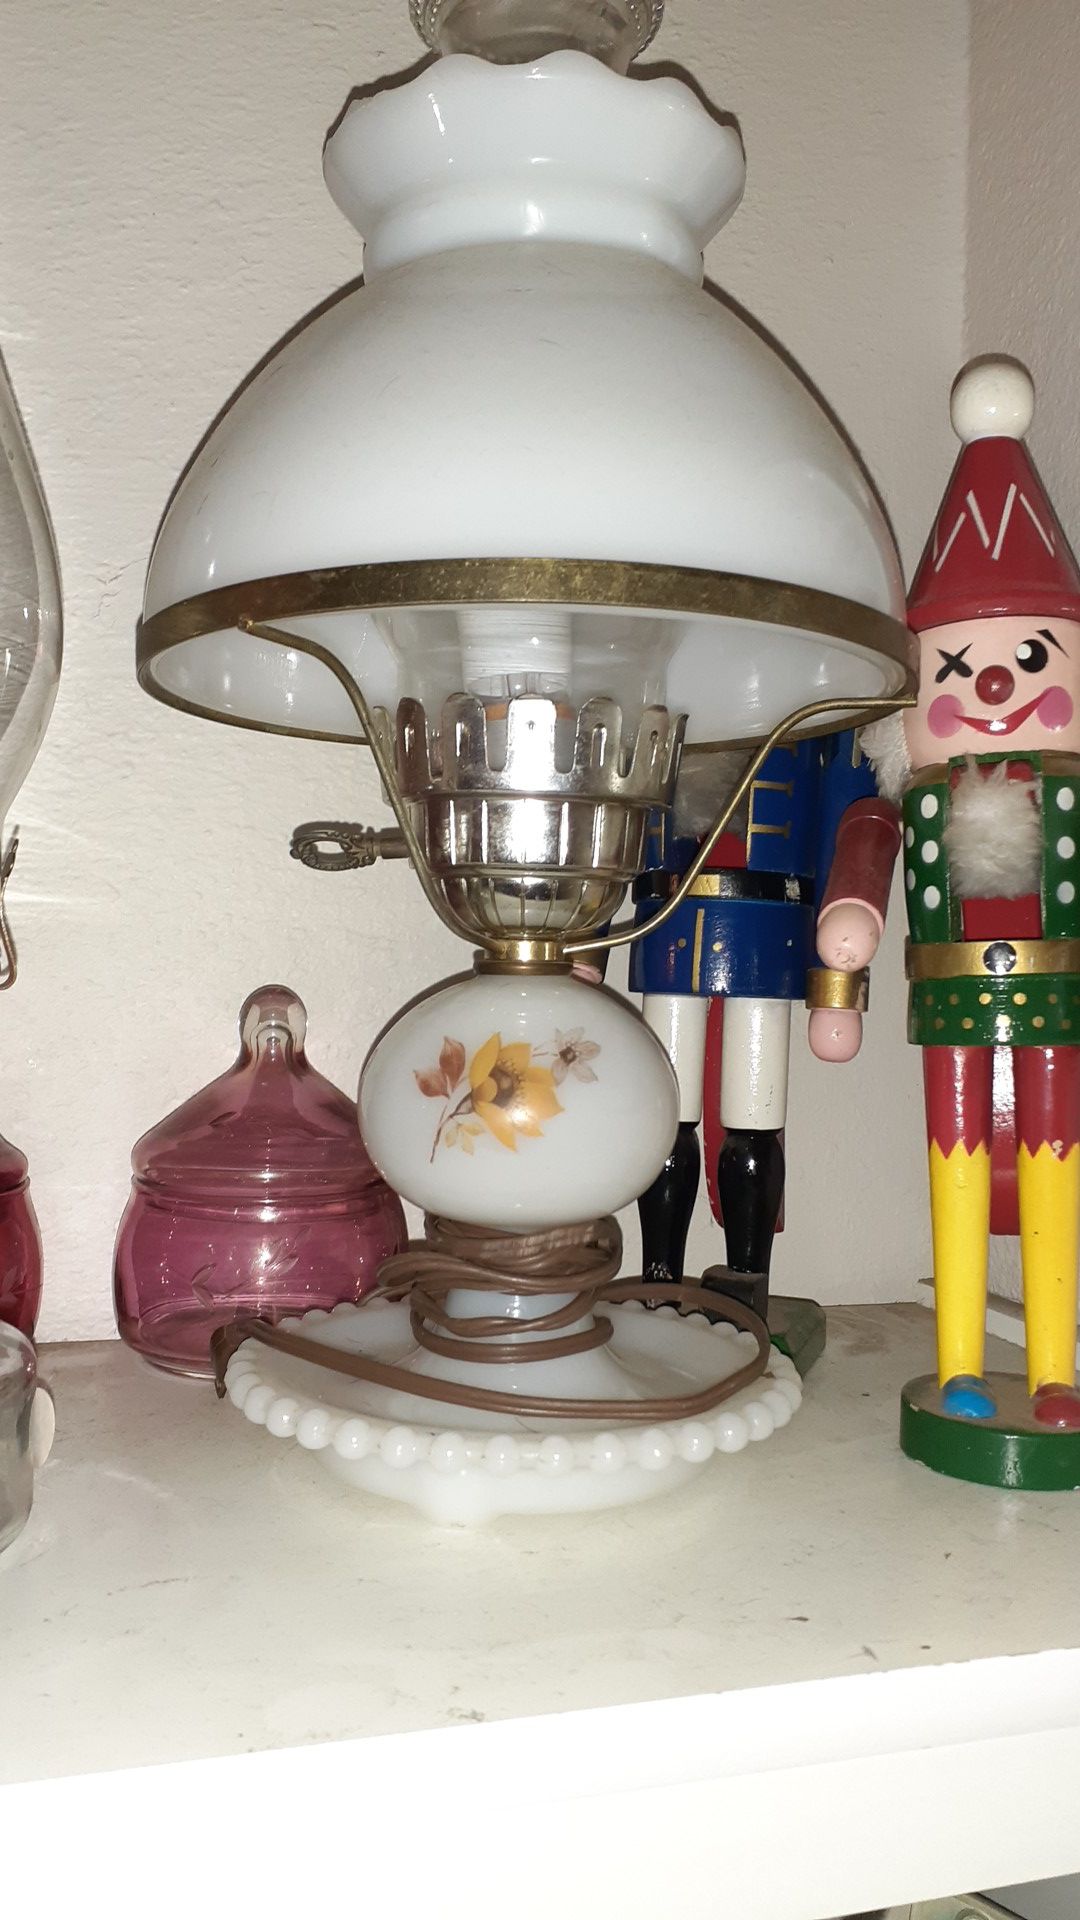 Antique table lamp.